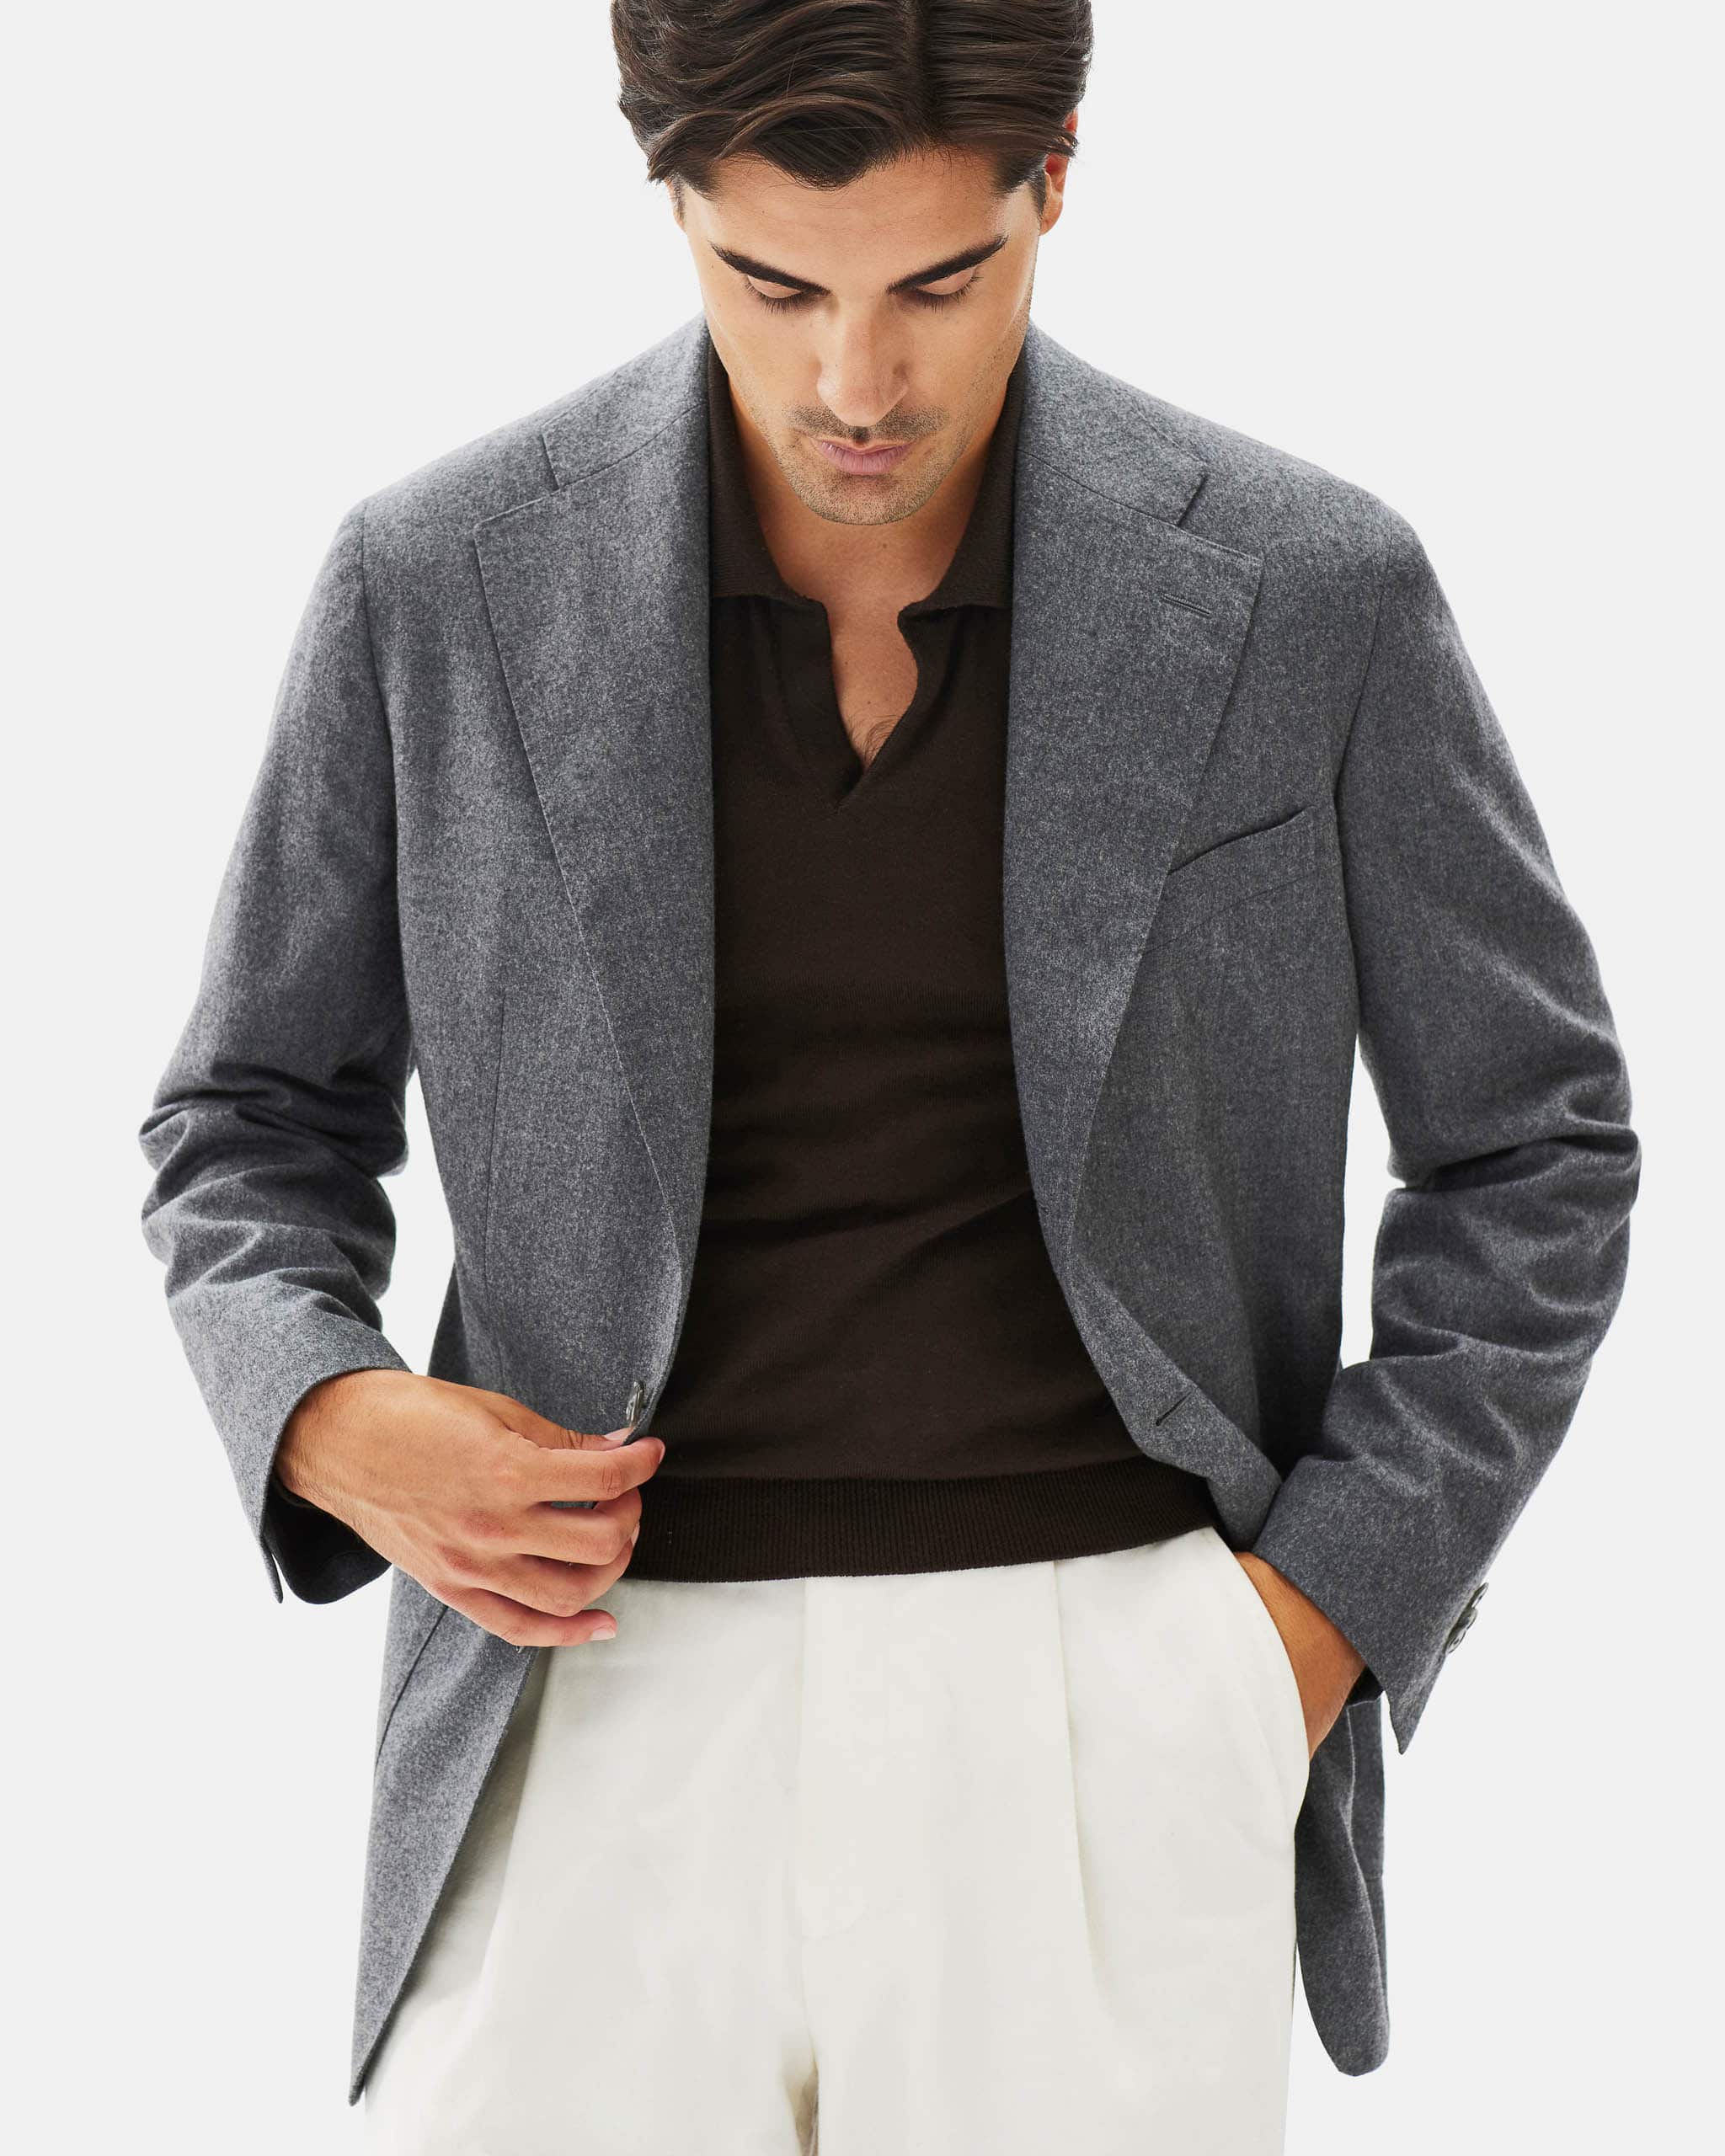 Jacket flannel mid grey image 2